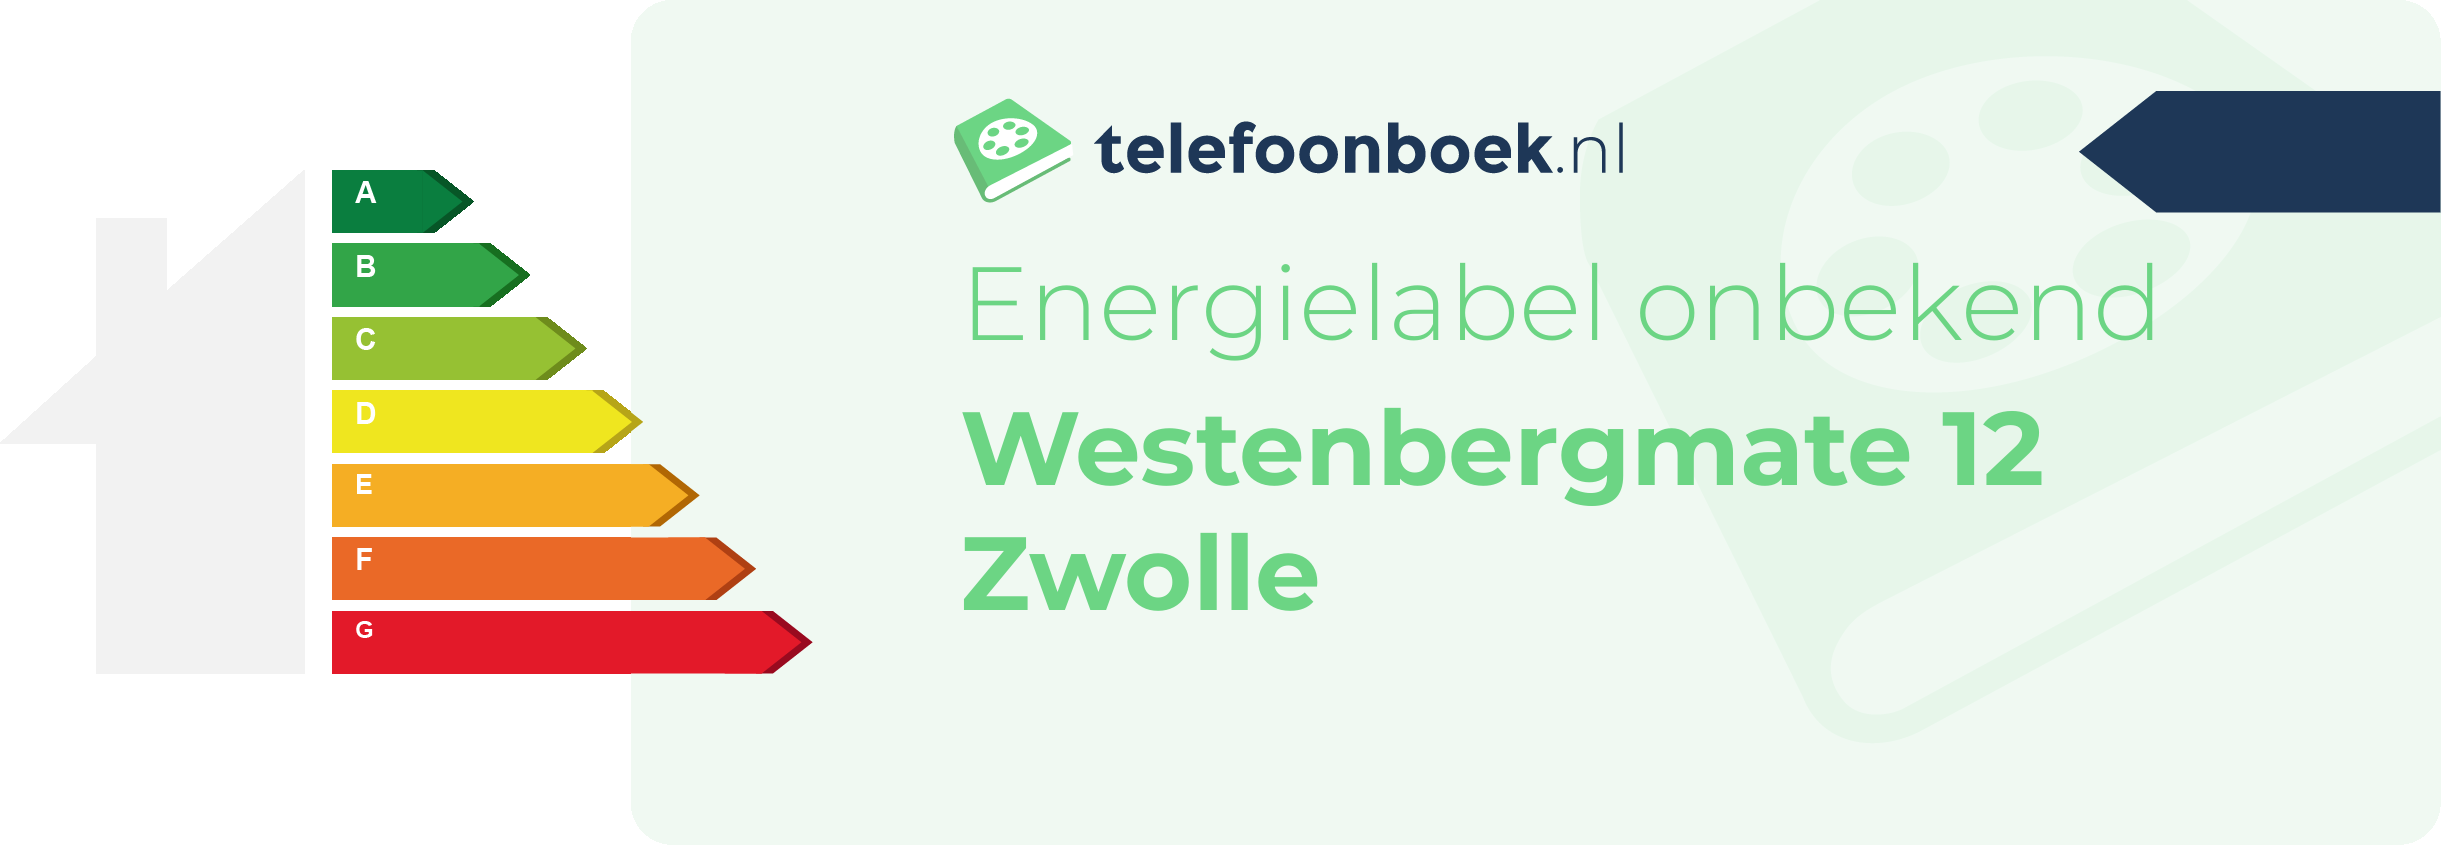 Energielabel Westenbergmate 12 Zwolle